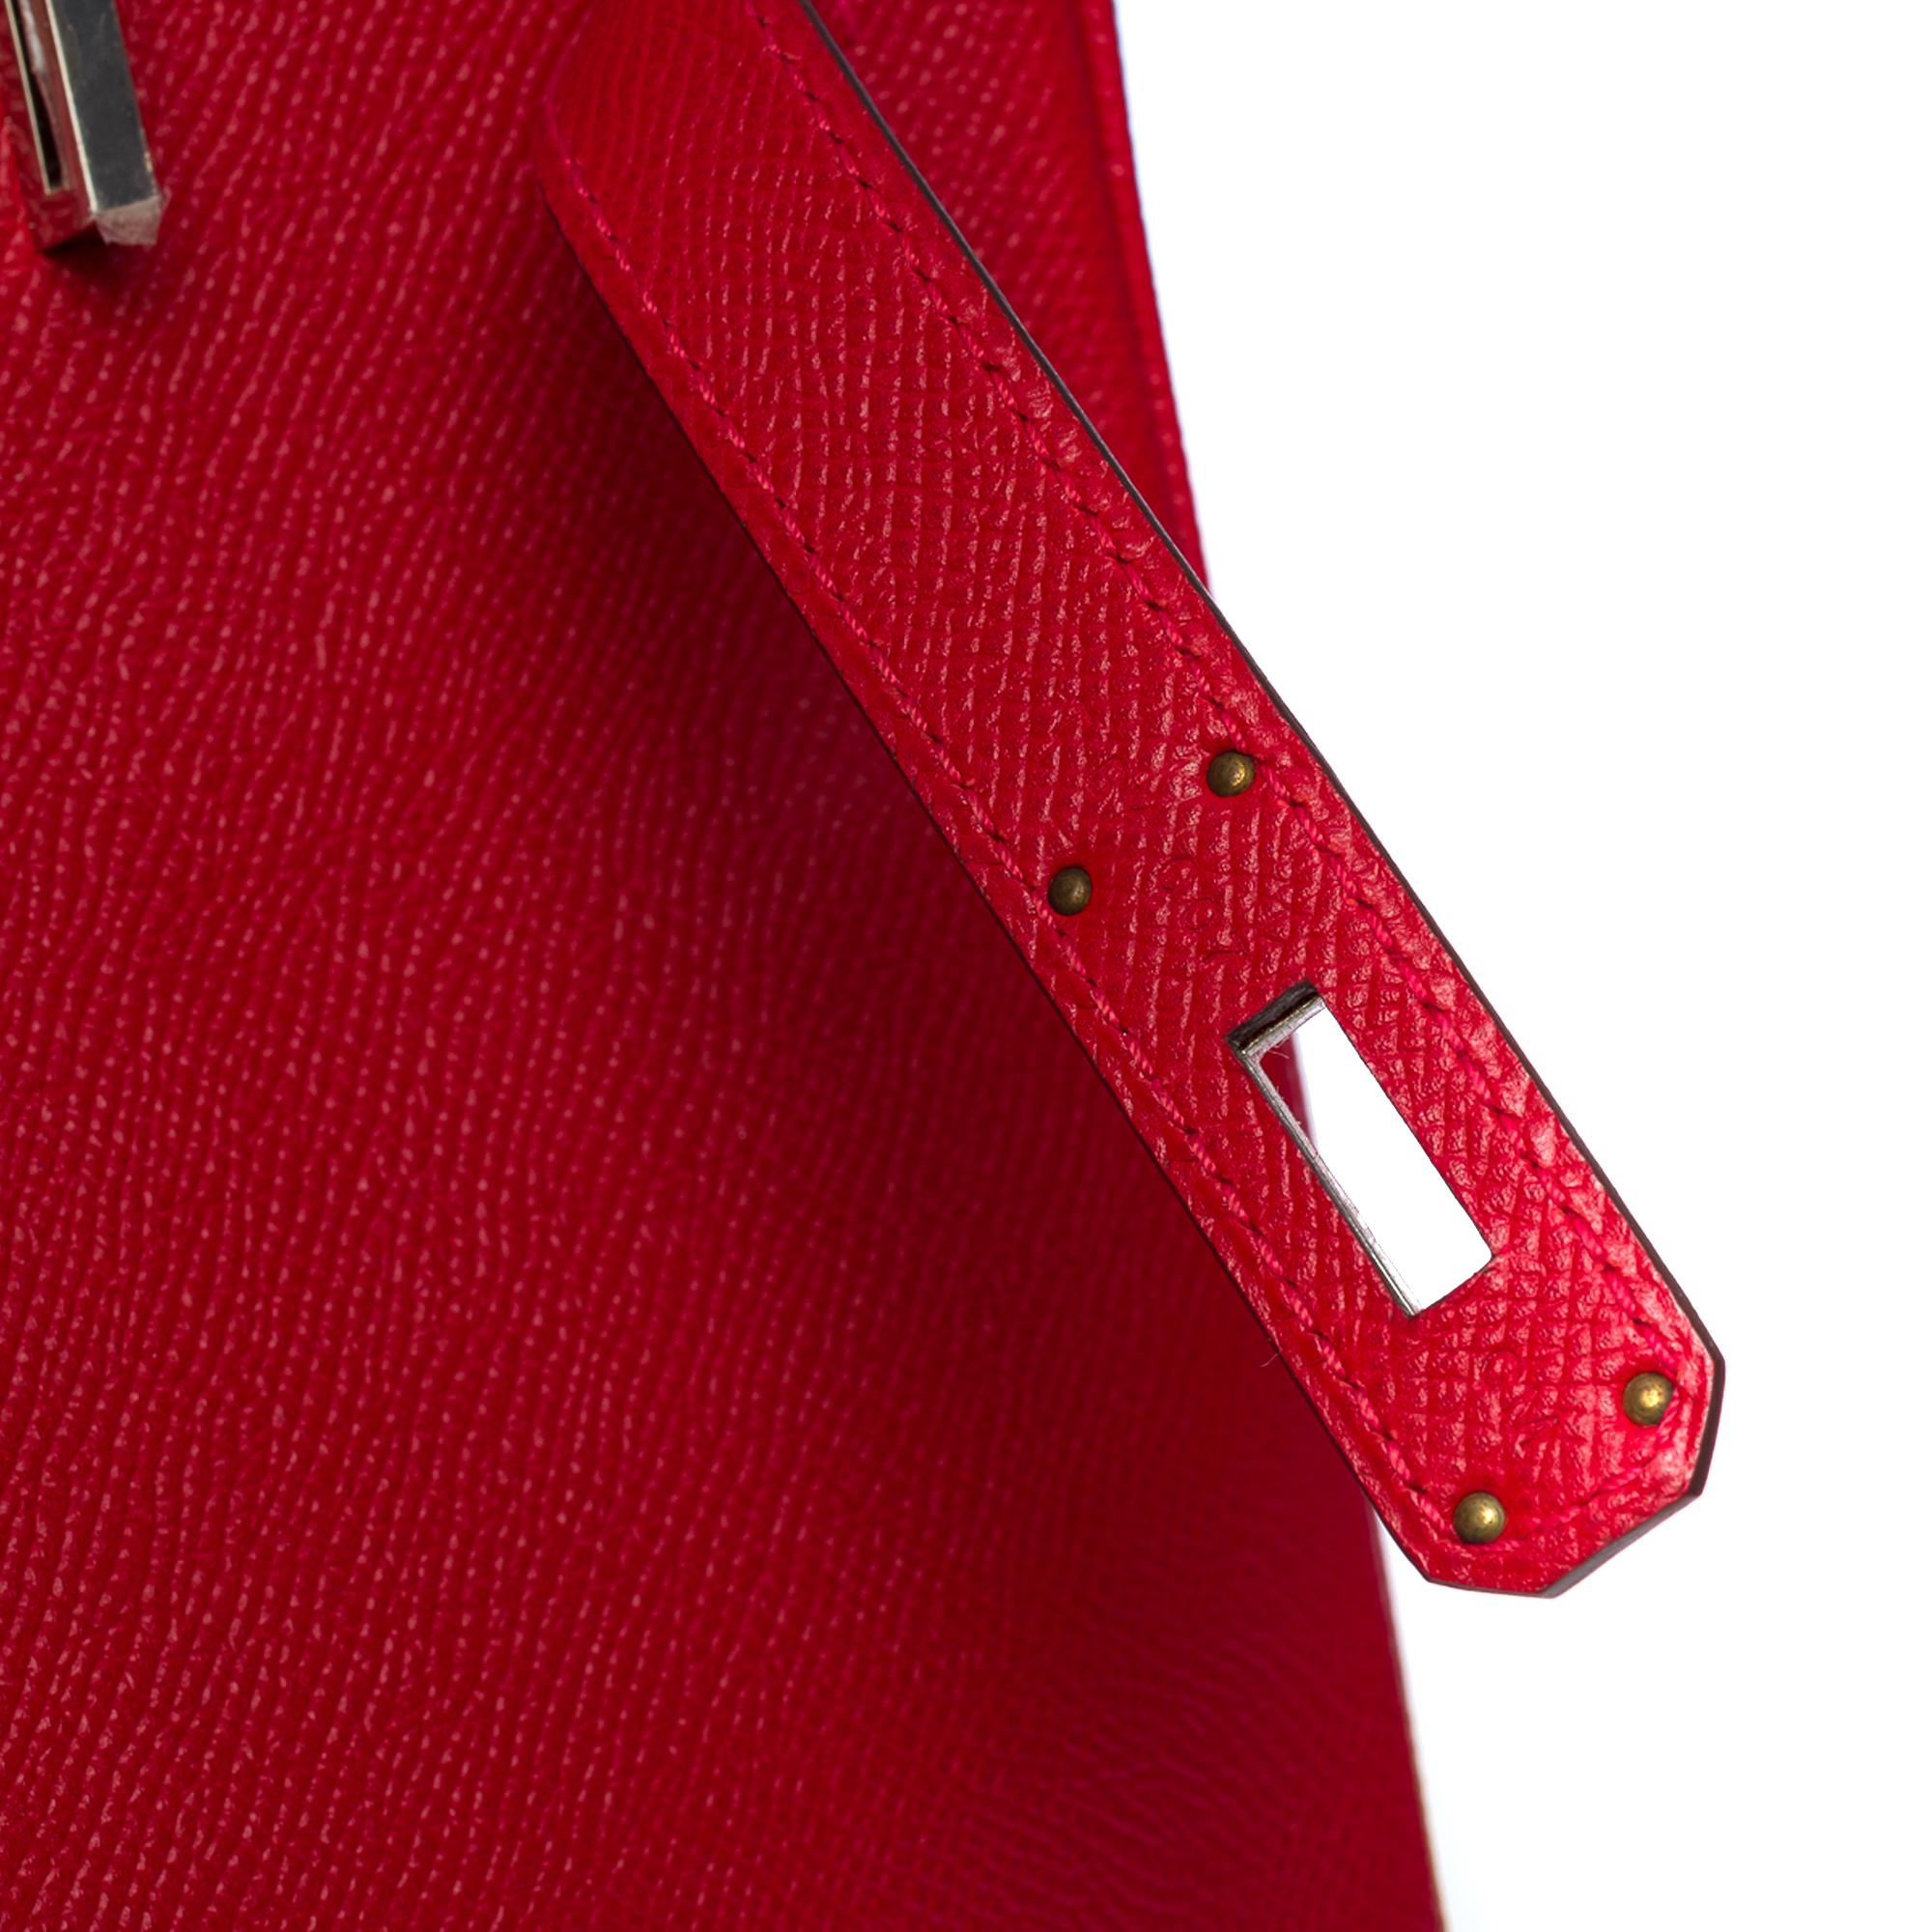 Stunning Hermès Birkin 35 handbag in Rouge Casaque Epsom leather, SHW 2